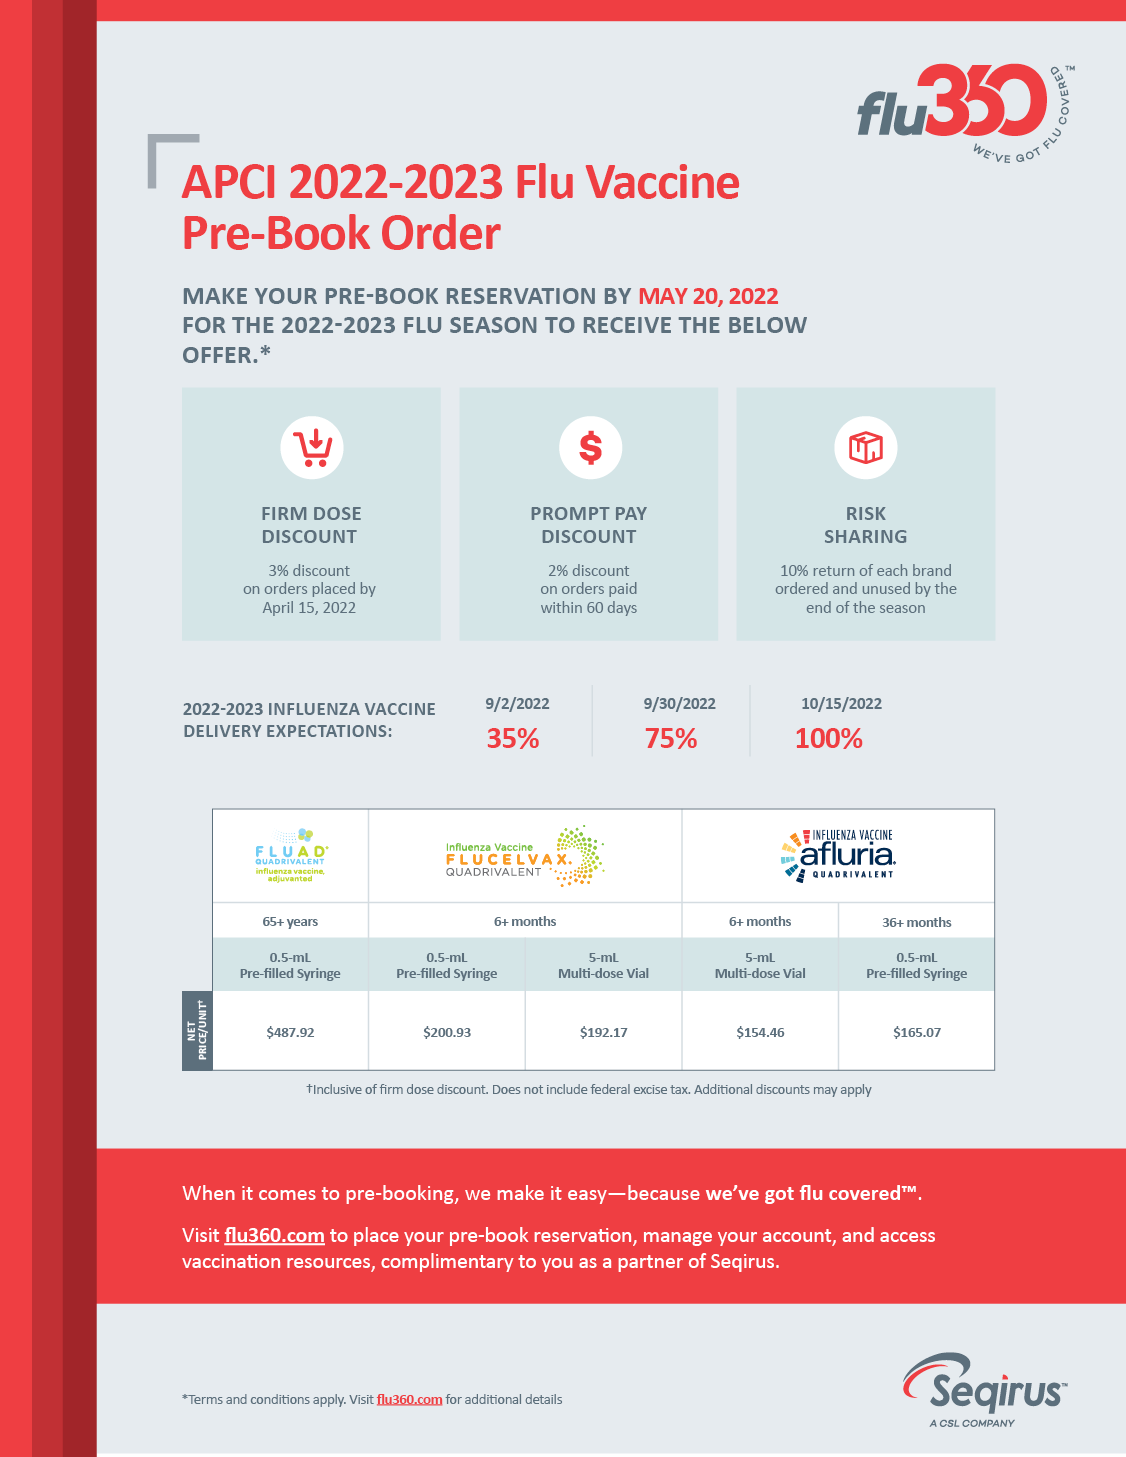 Seqirus flu vaccine information sheet